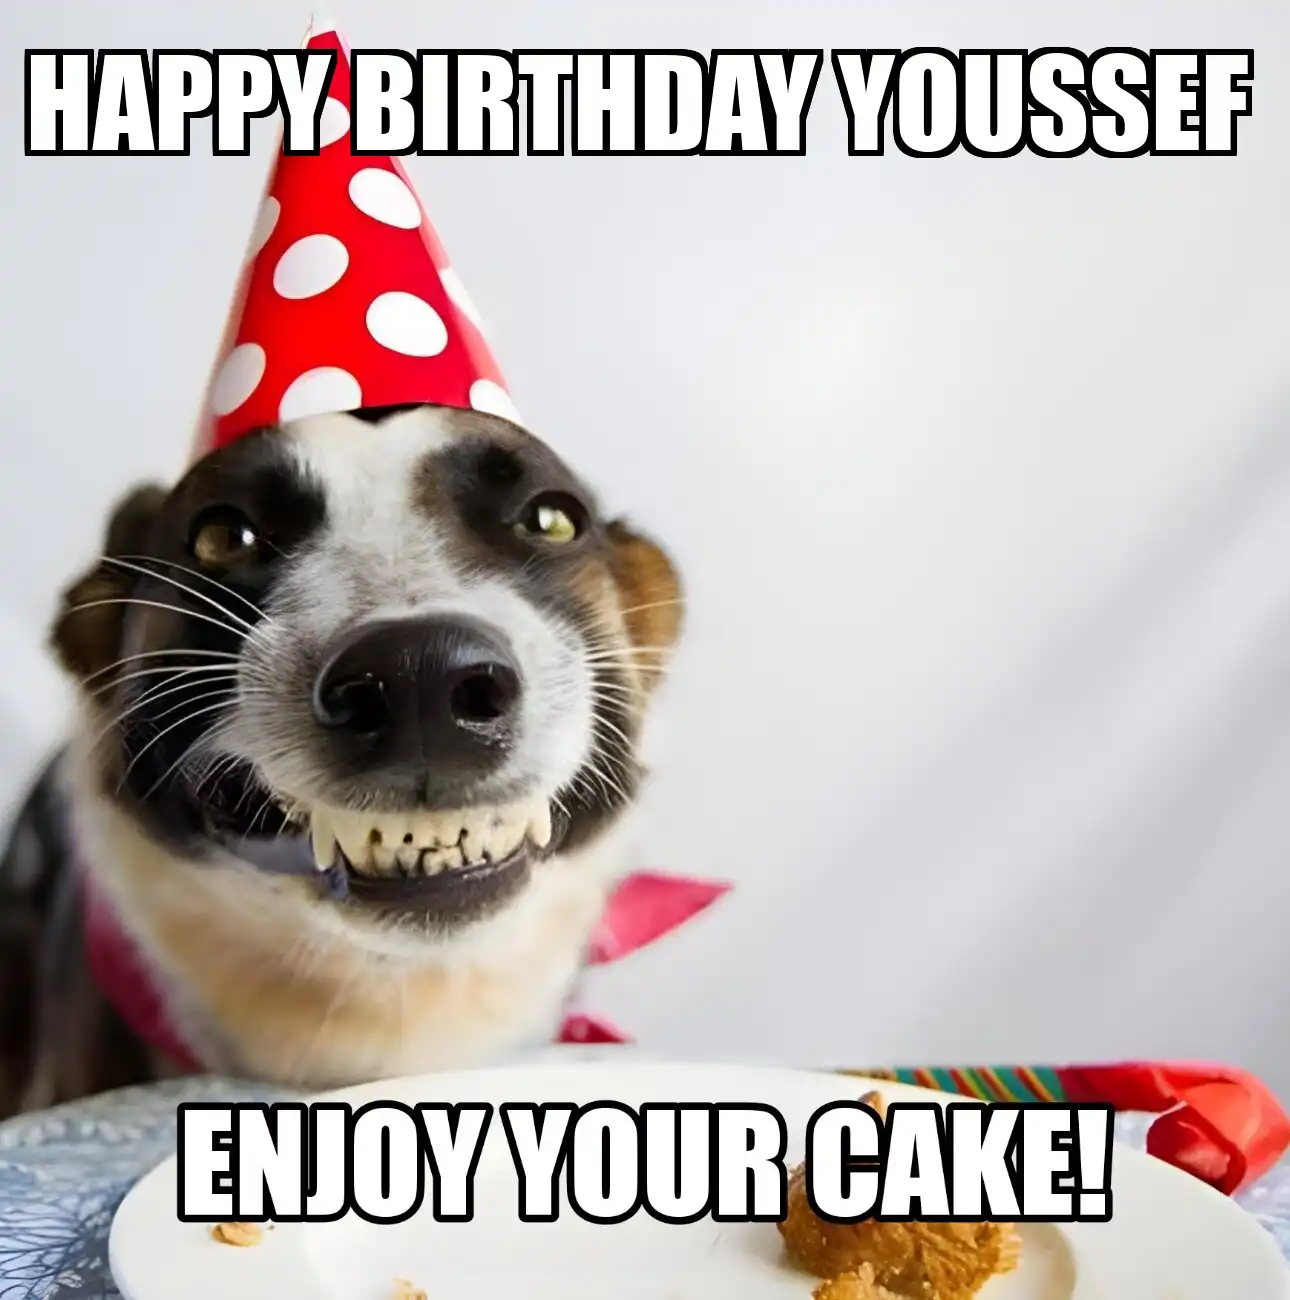 Happy Birthday Youssef Enjoy Your Cake Dog Meme